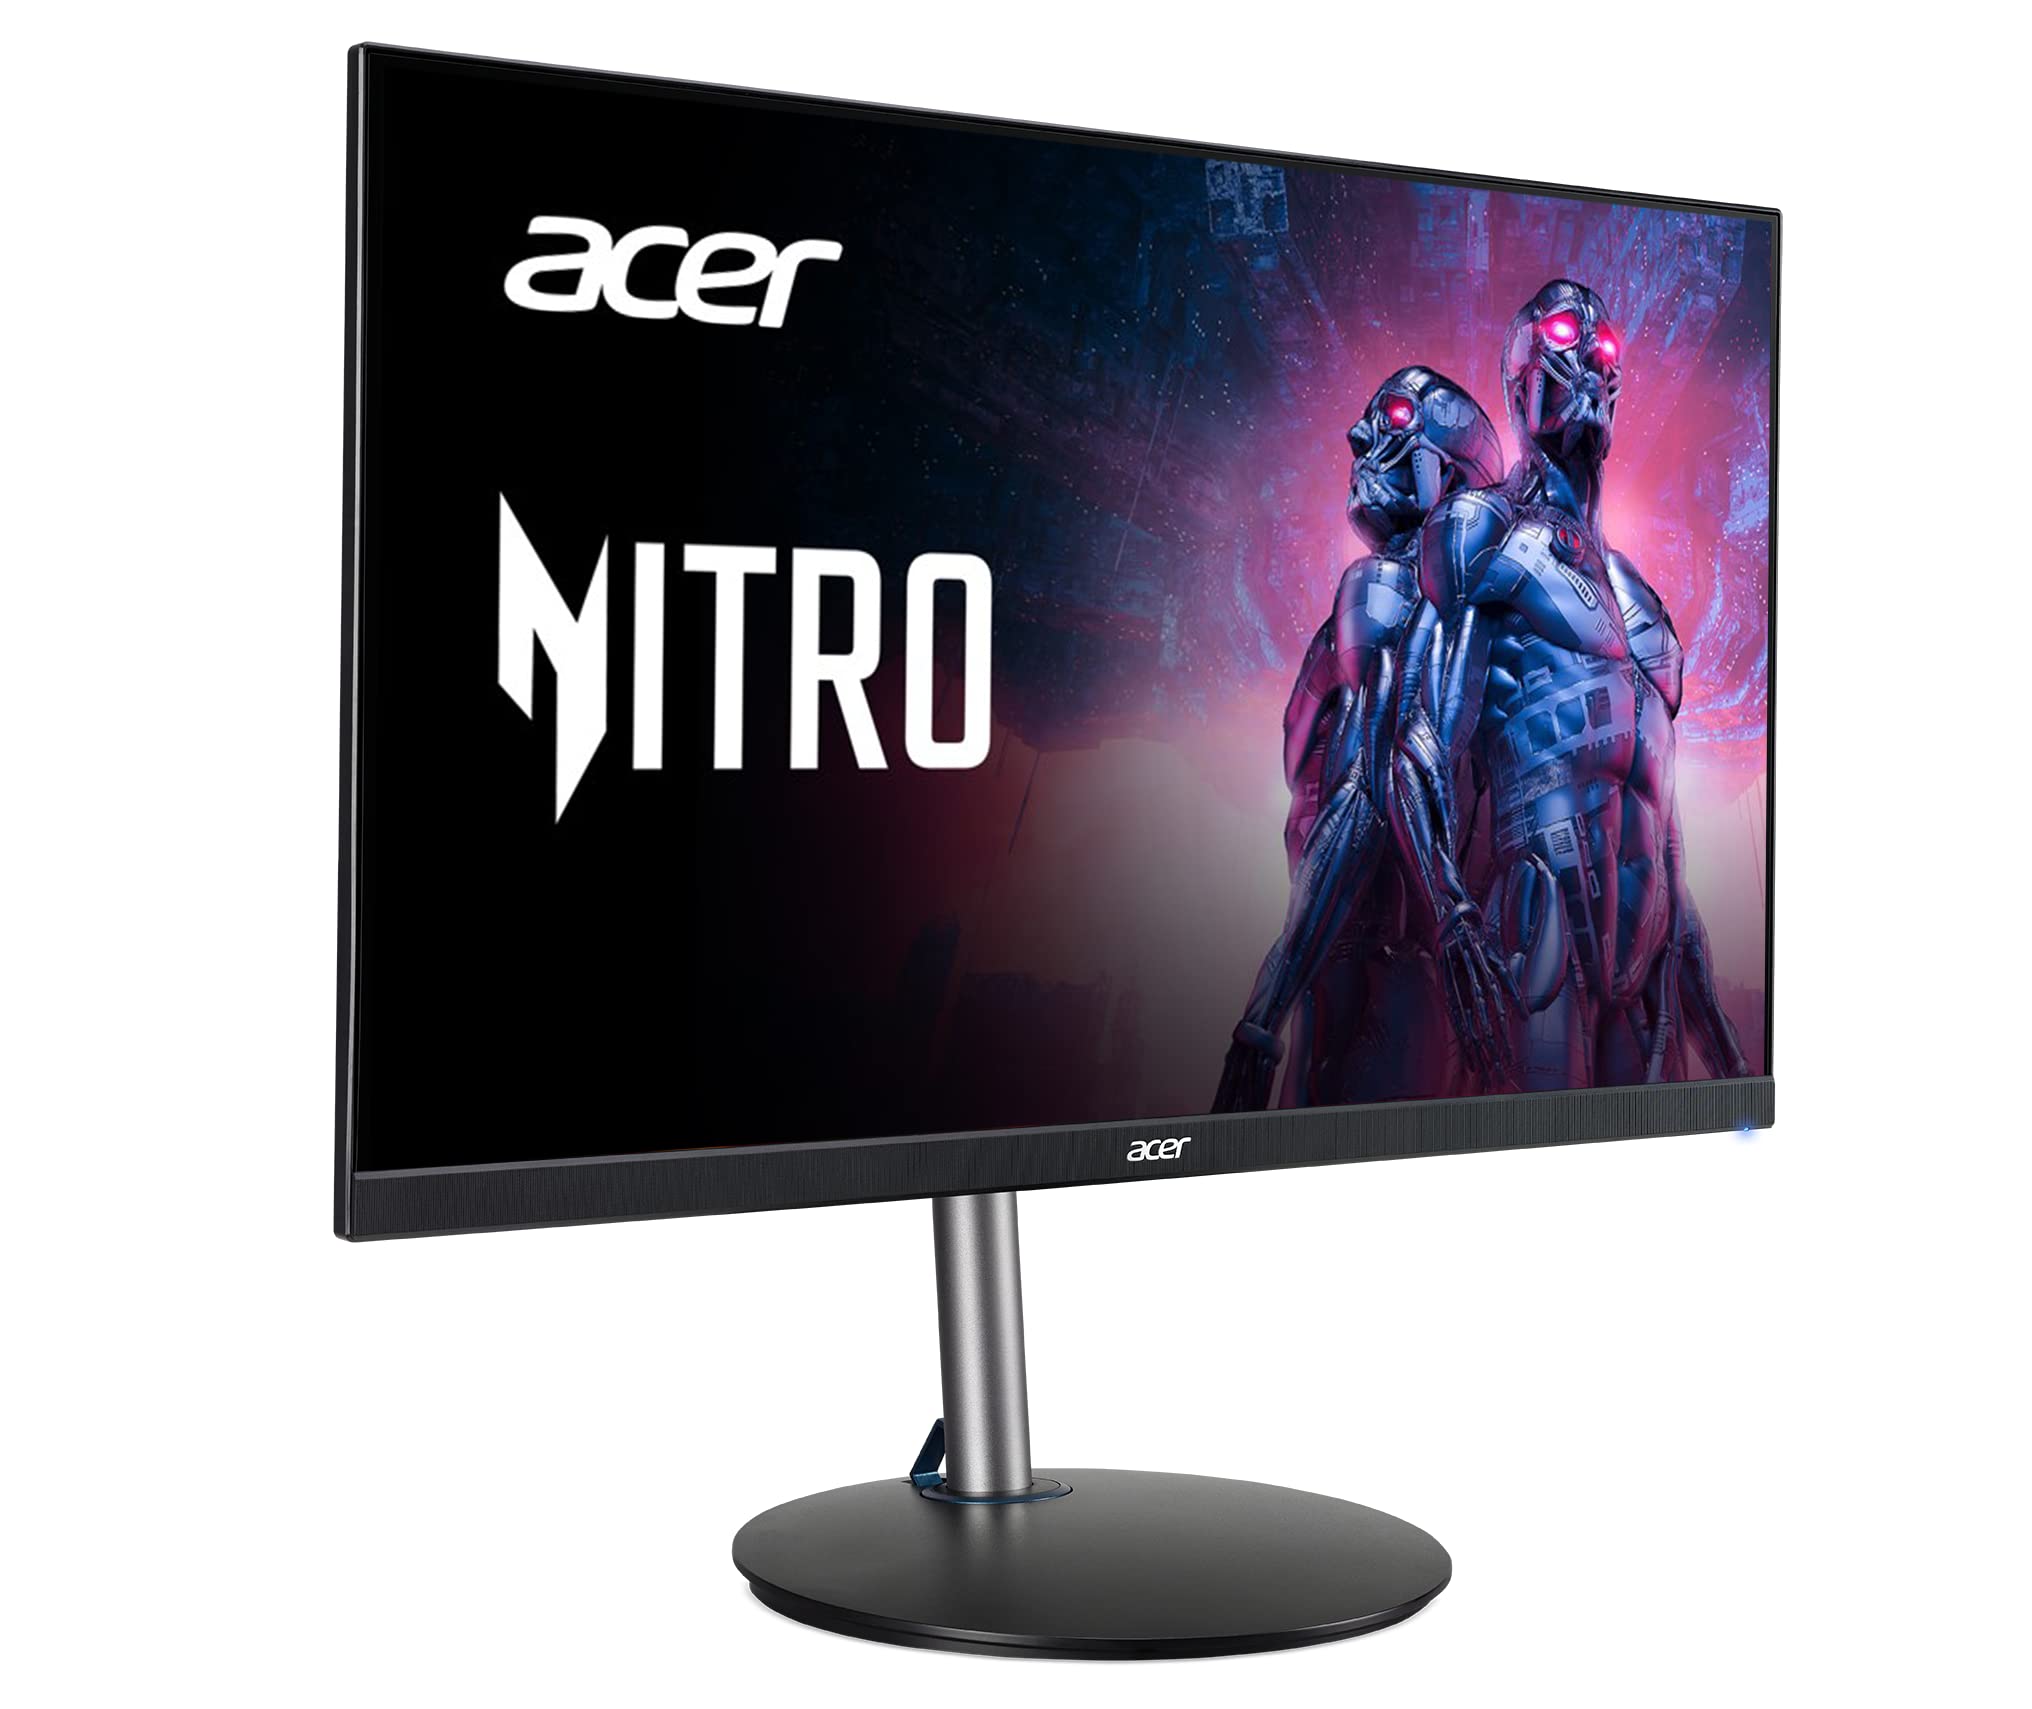 Acer Nitro XFA243Y Sbiipr 23.8” Full HD (1920 x 1080) VA Gaming Monitor | AMD FreeSync Premium Technology | 165Hz Refresh Rate | 1ms VRB | HDR 10 | 1 Display Port 1.2 & 2 HDMI 2.0 Ports,Black